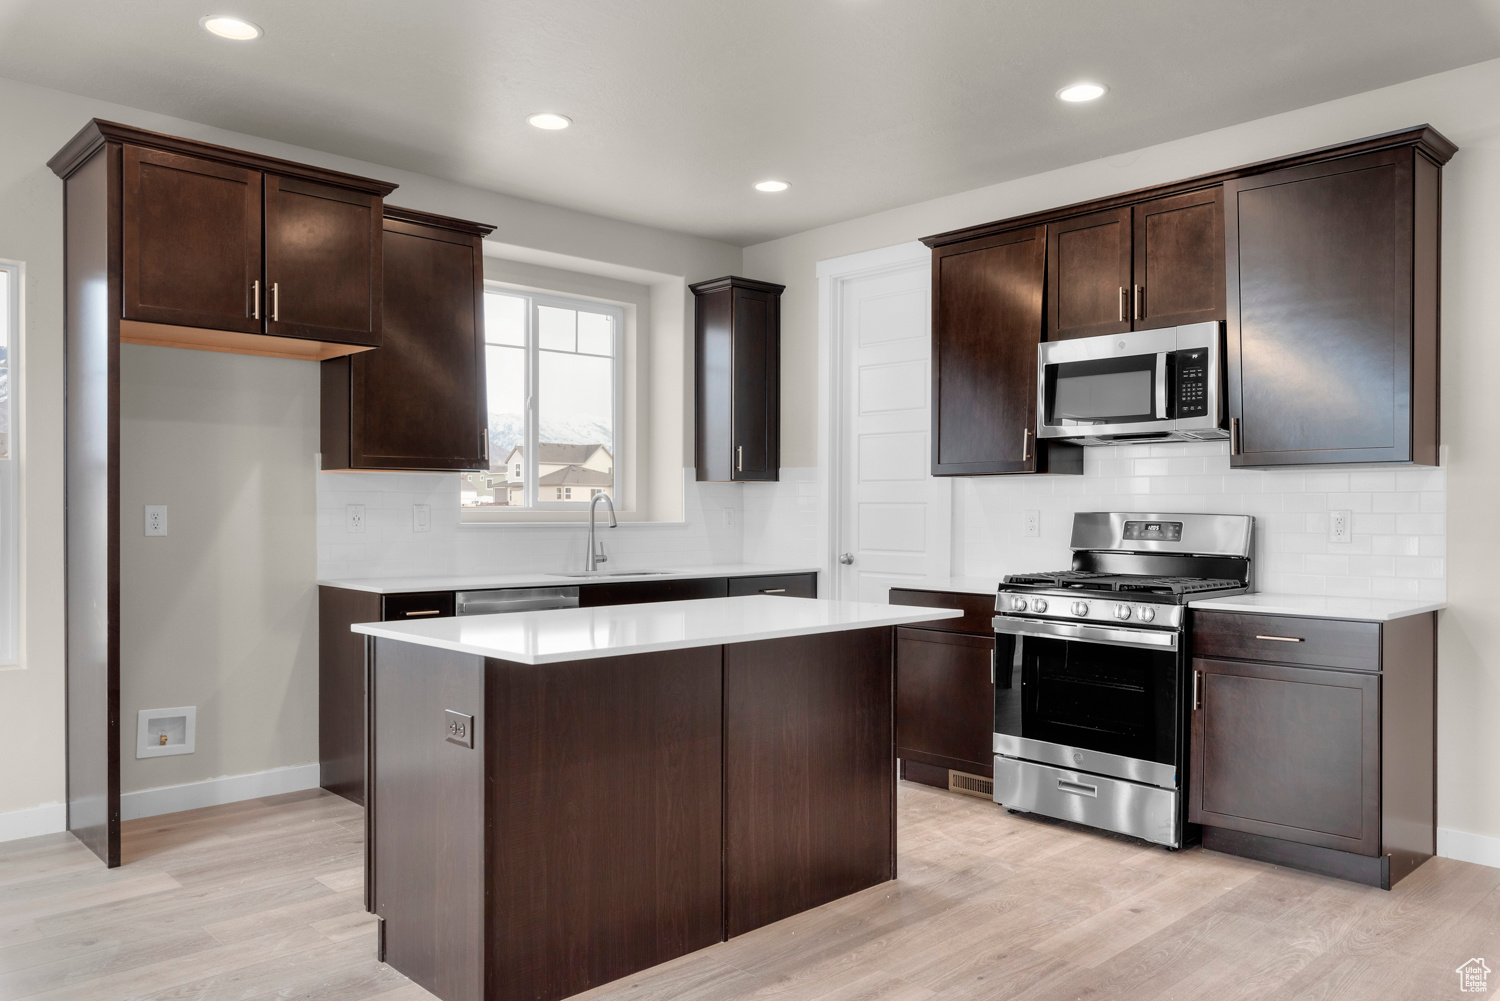 Kitchen with tasteful backsplash, stainless steel appliances, light wood-type flooring, and a kitchen island